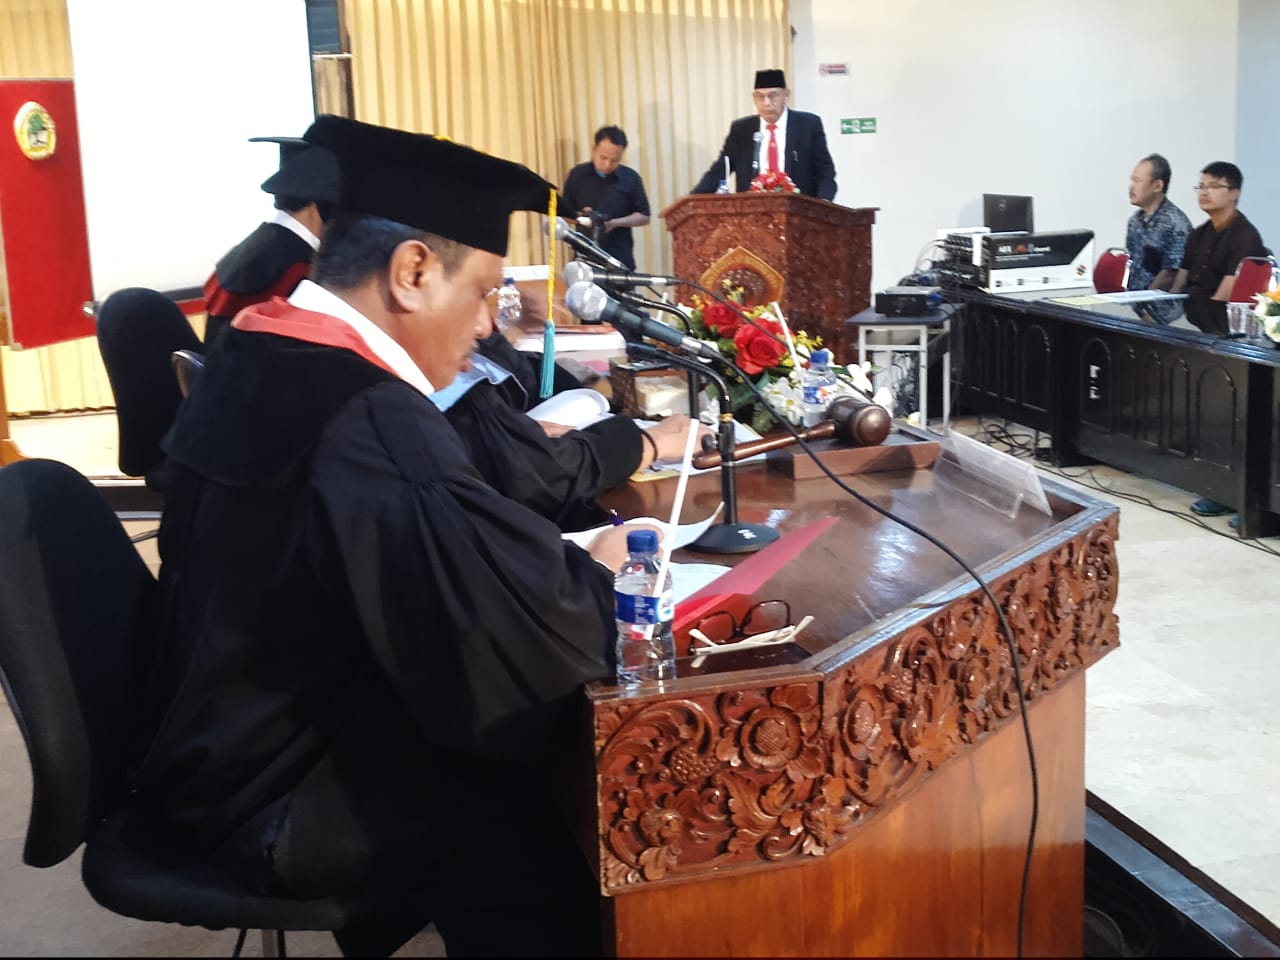 Ketua Mahkamah Konstitusi Republik Indonesia Dan Aplikasi Transkrip Persidangan Menunjang Prinsip Tr